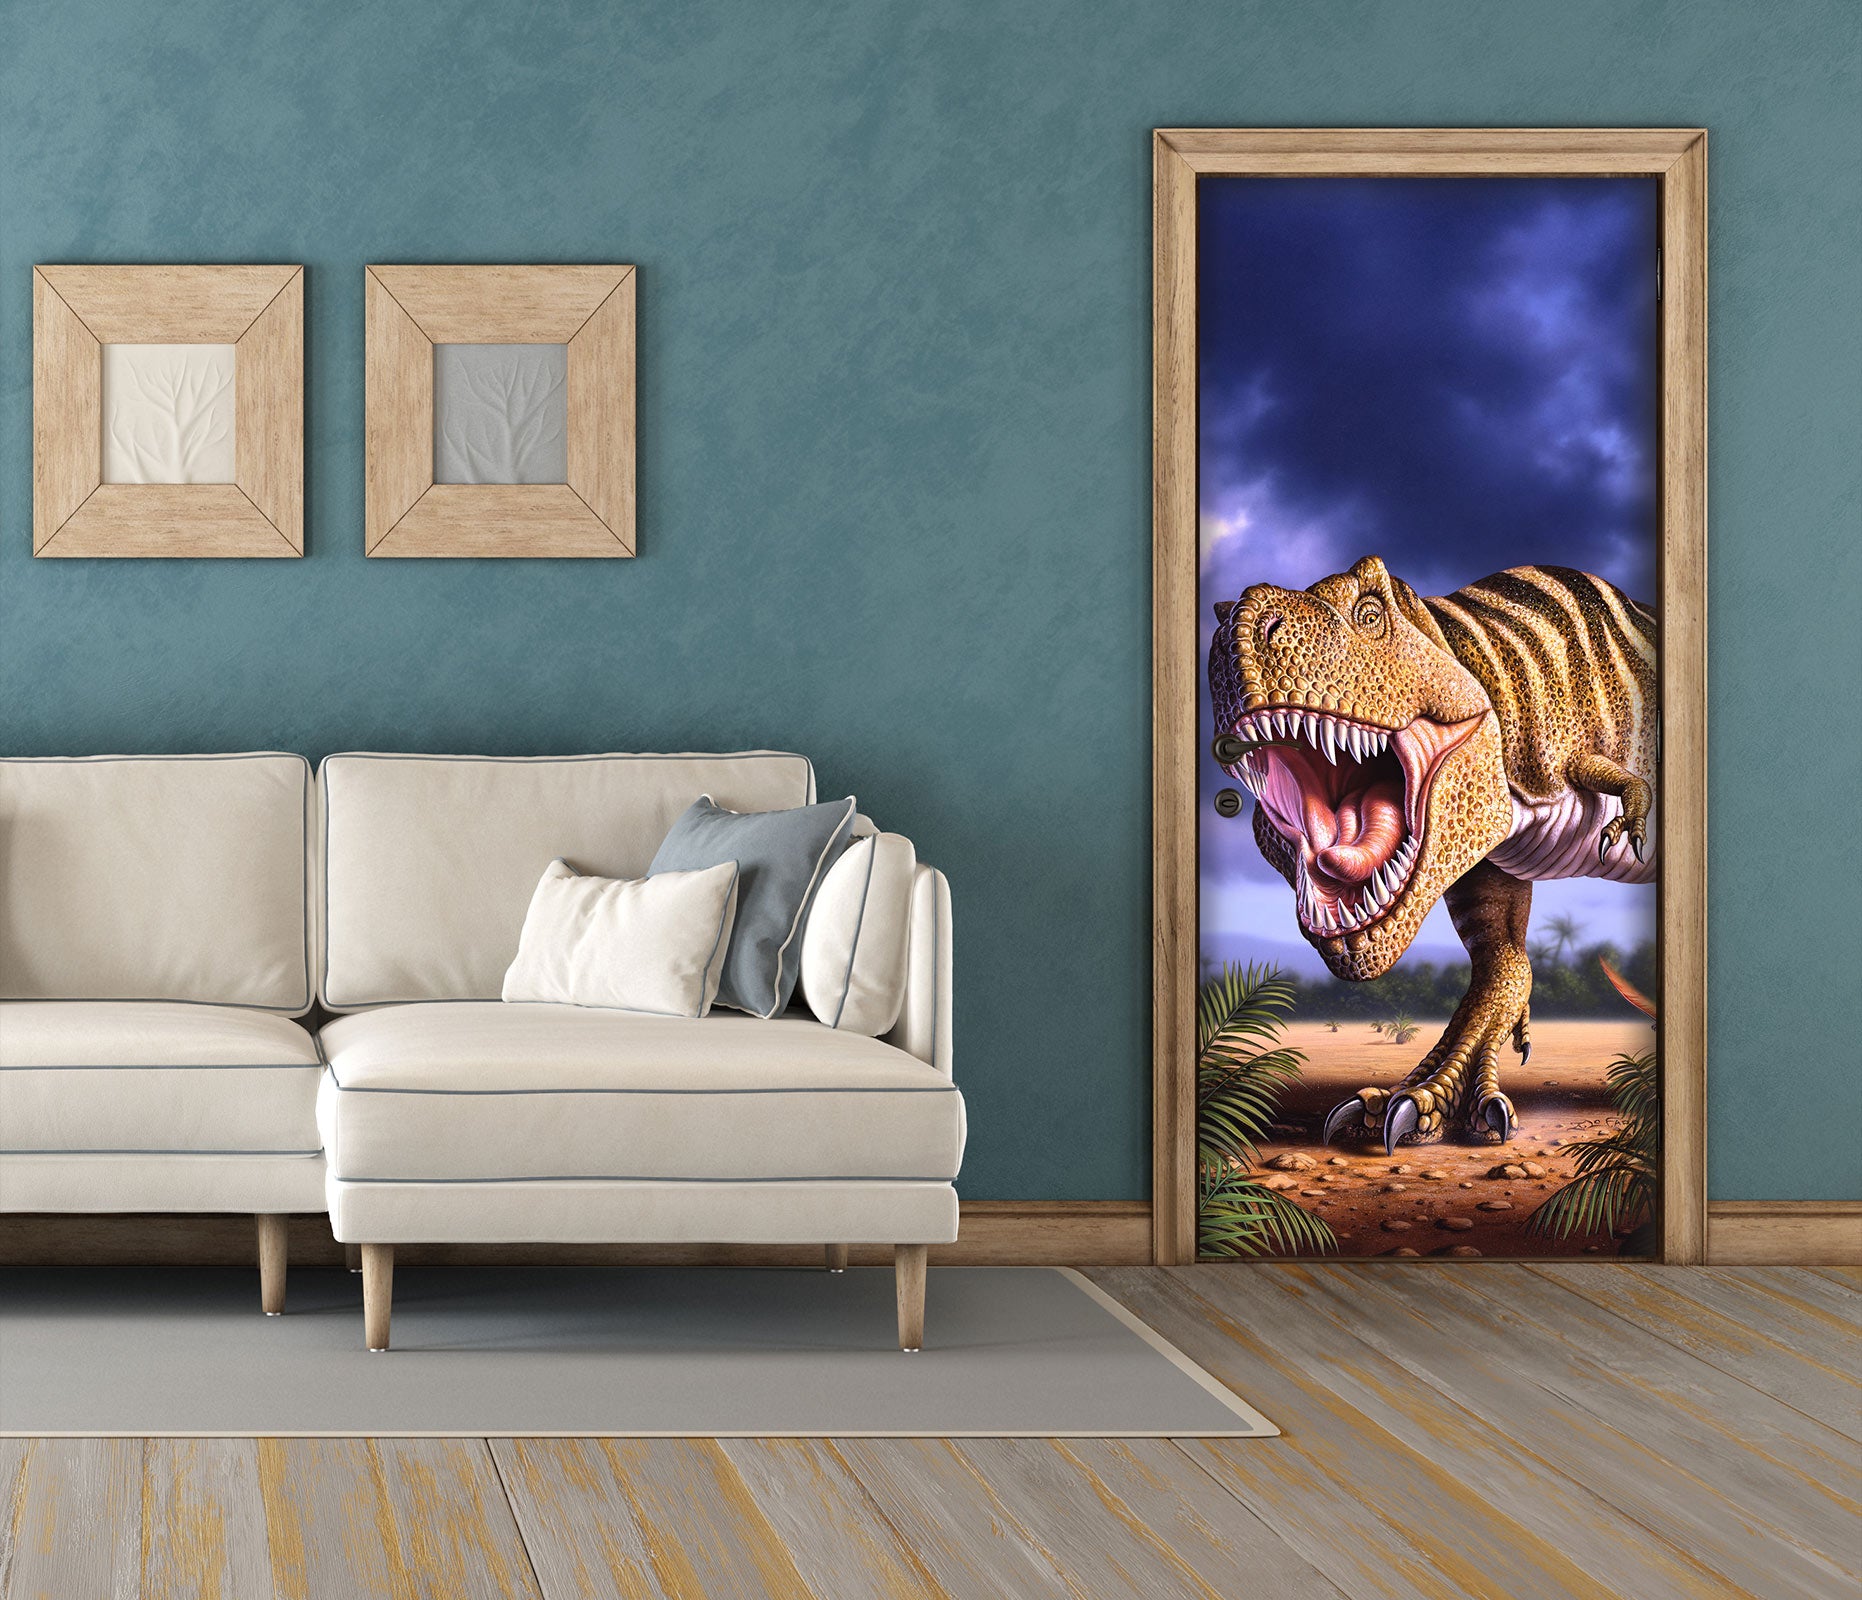 3D Tyrannosaurus Rex 112118 Jerry LoFaro Door Mural